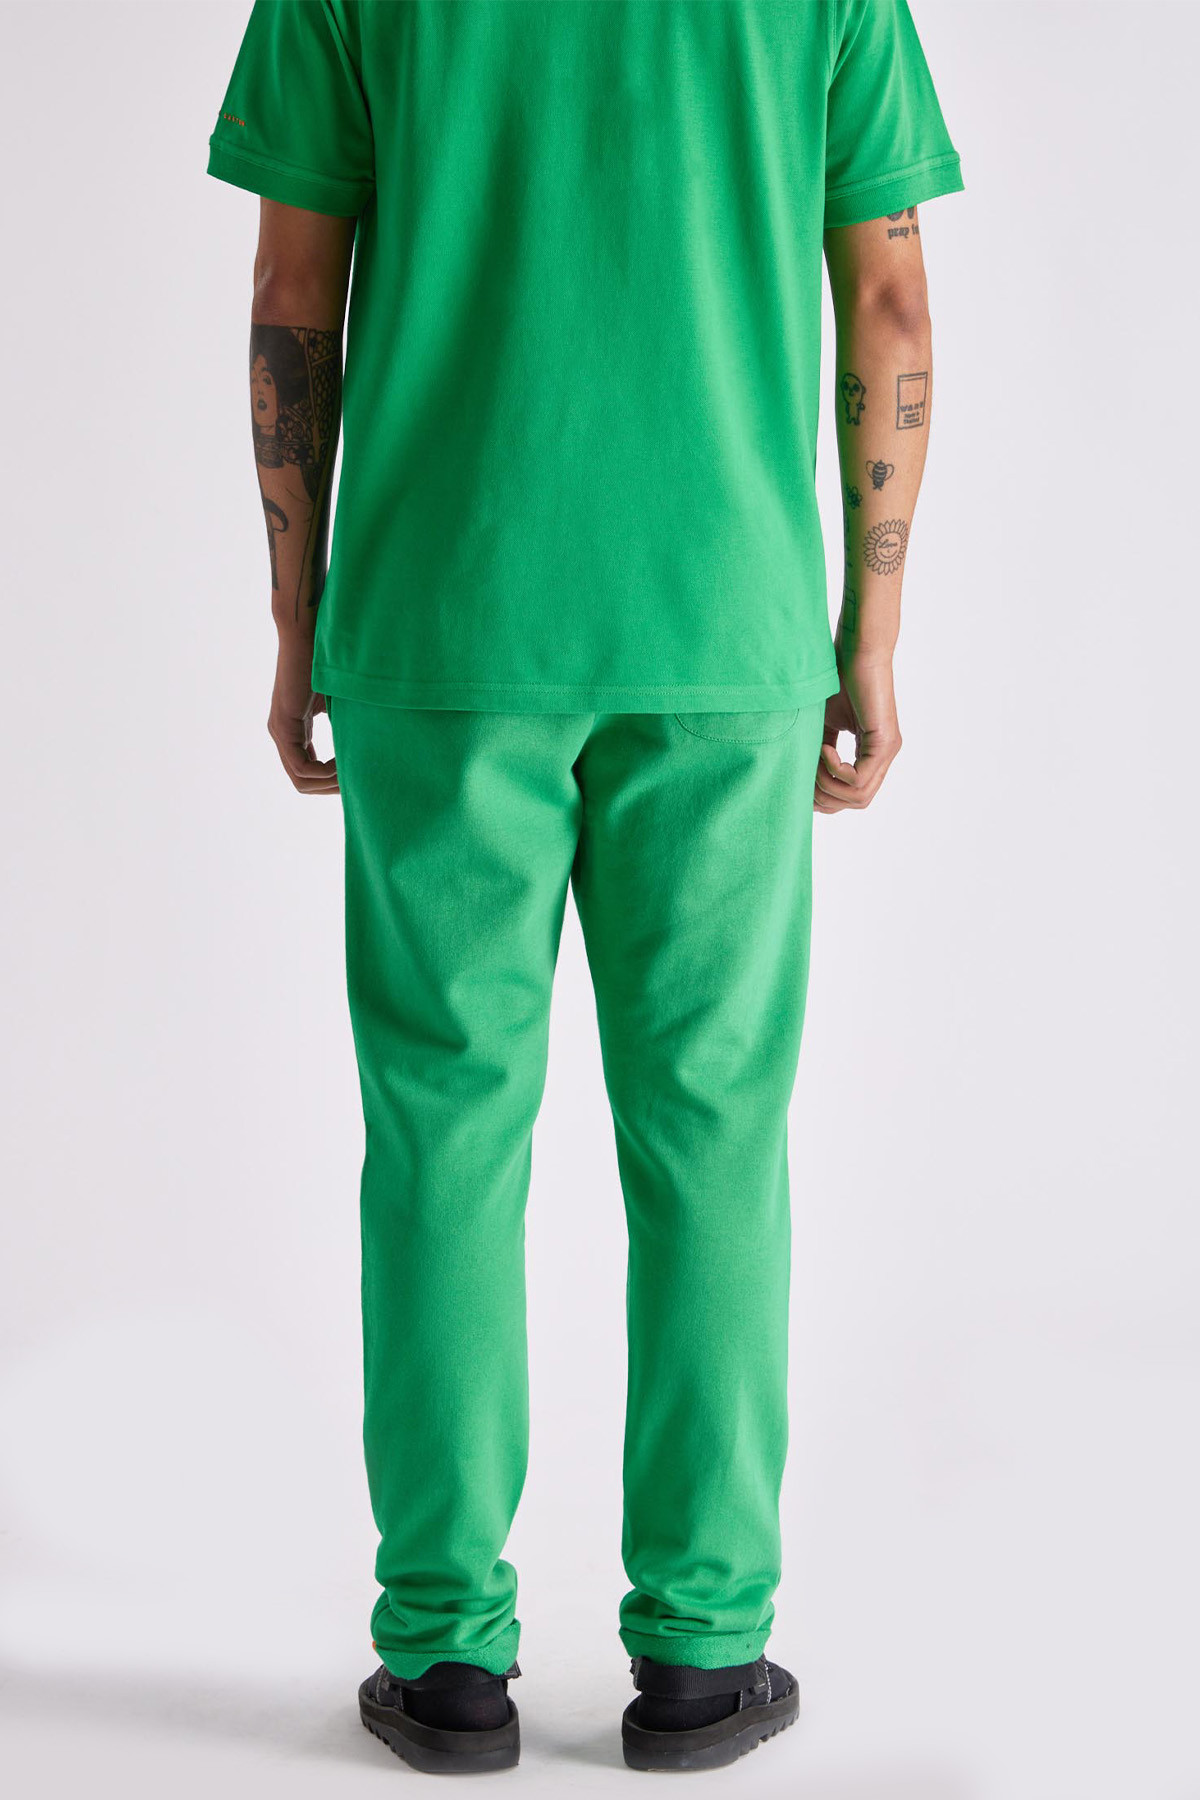 Unisex cotton jogging suit Noemie Green